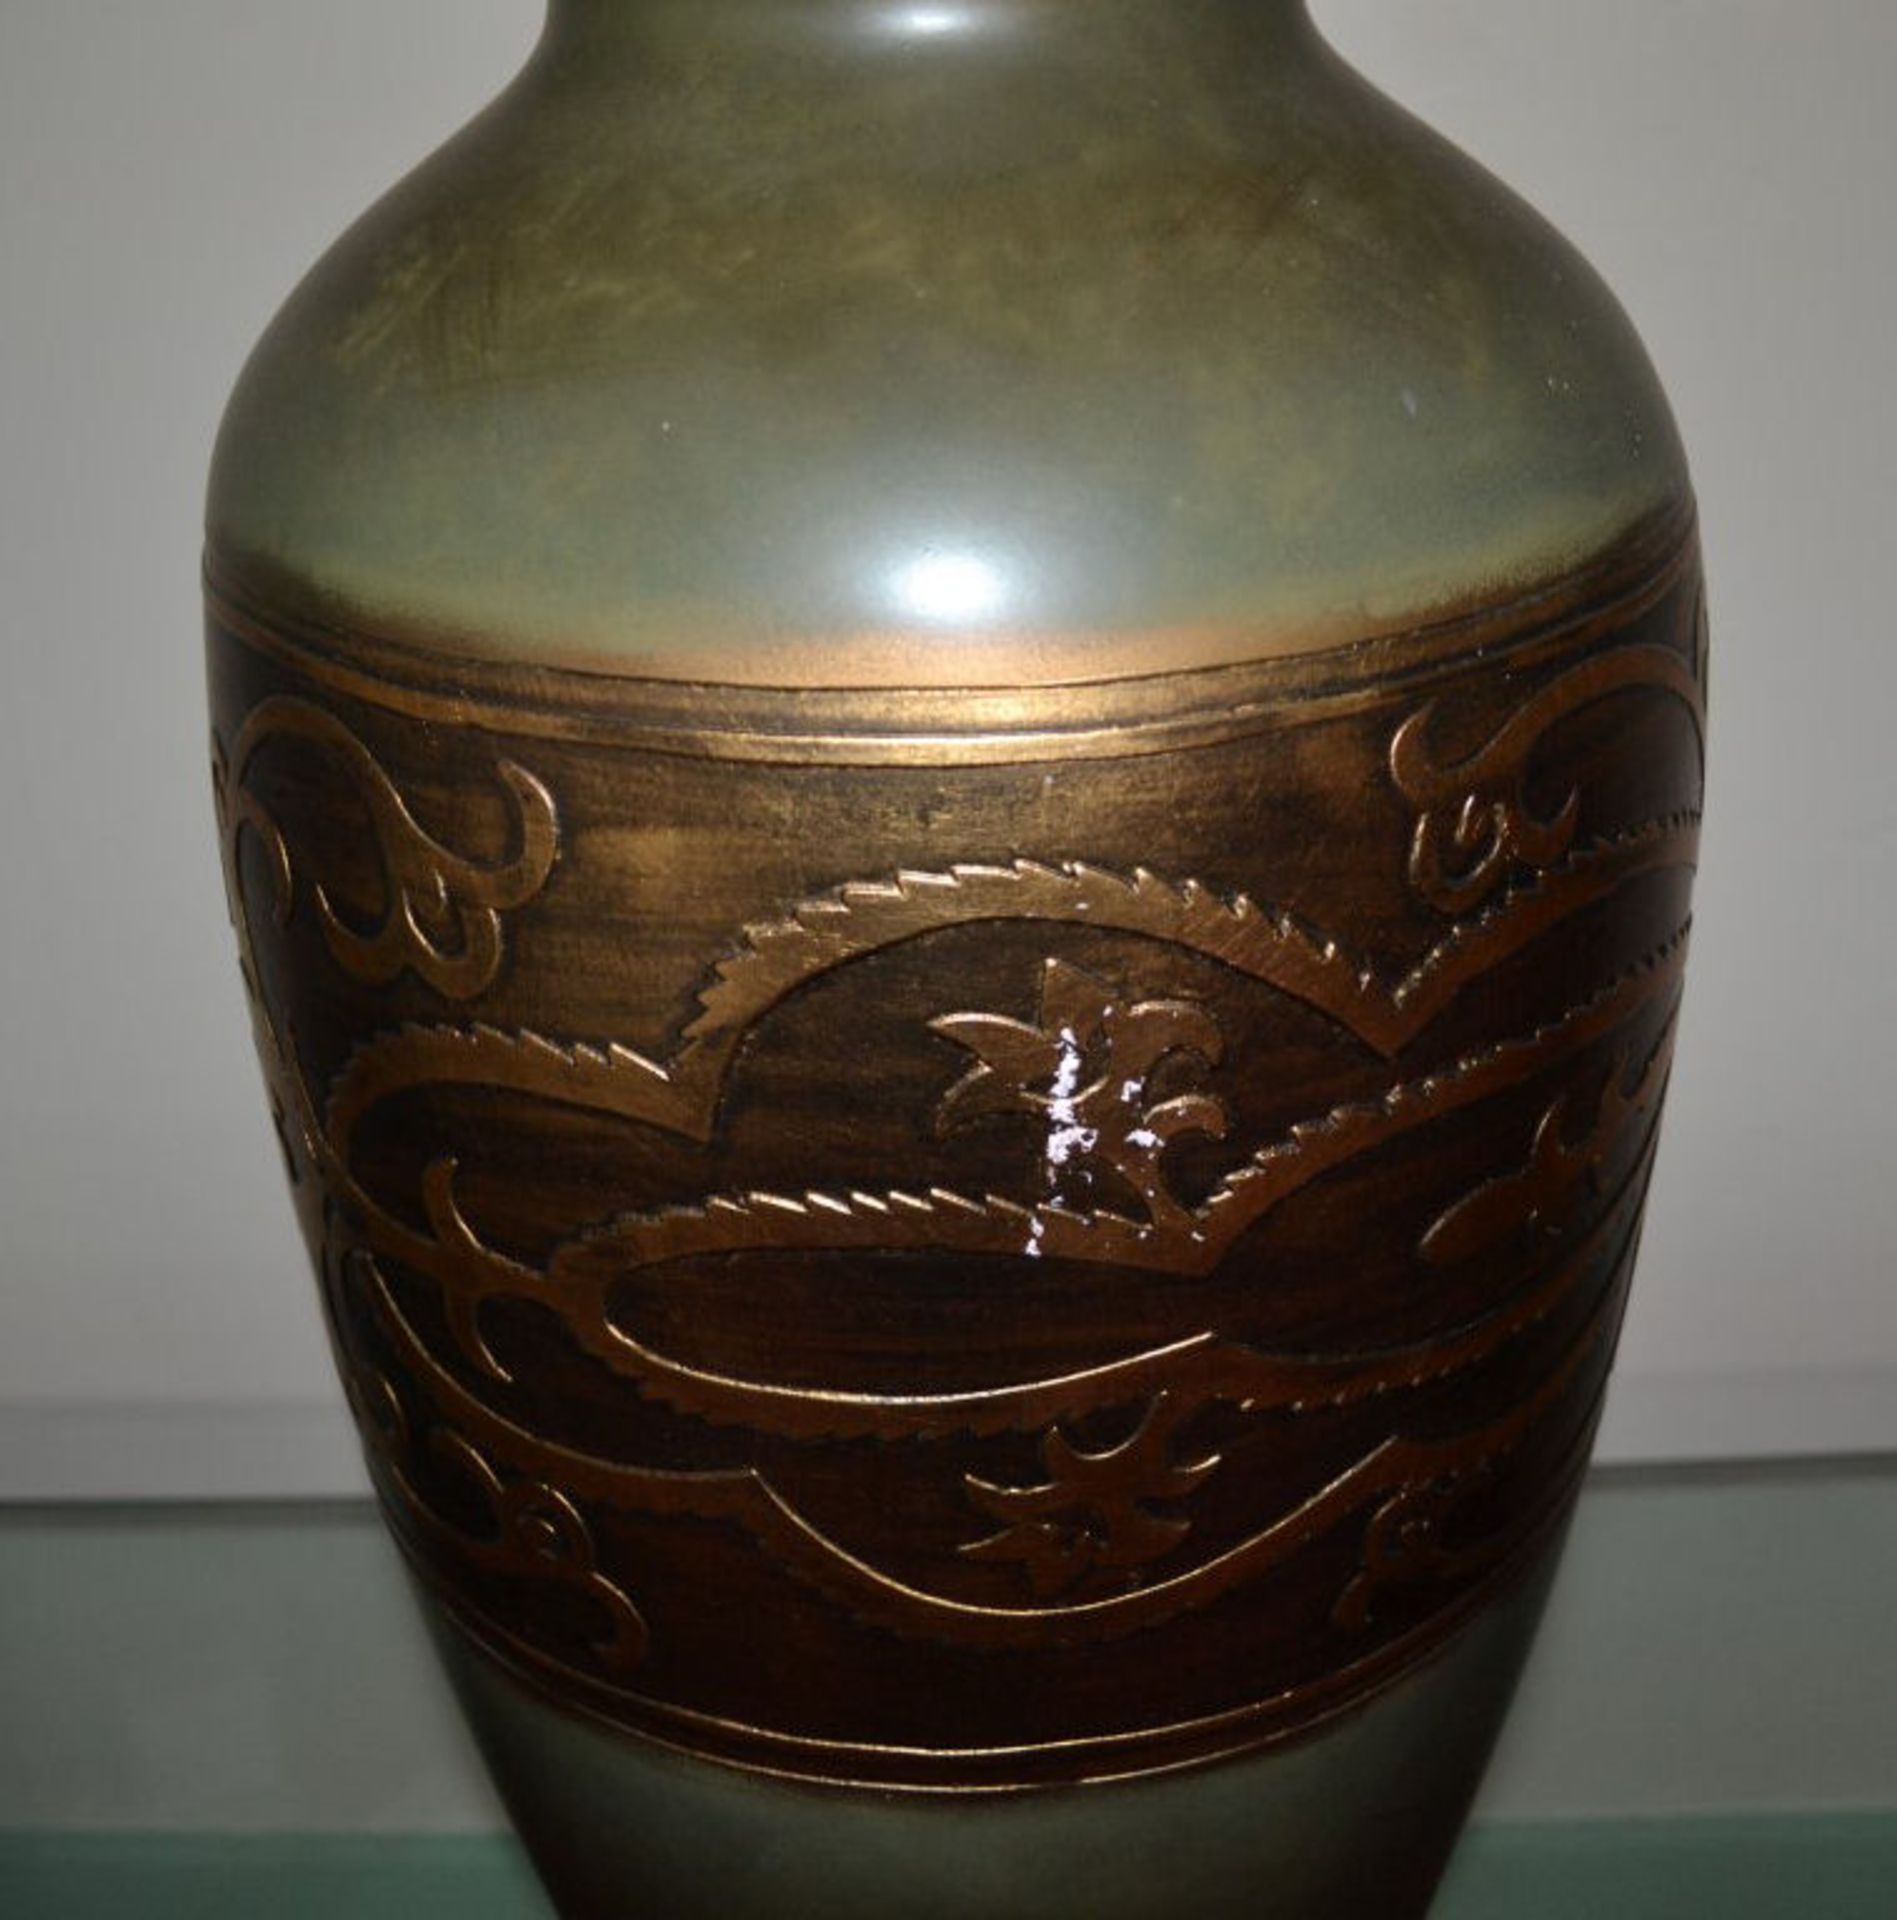 5 Assorted Decorative Vases - See Description For Details - Image 18 of 19